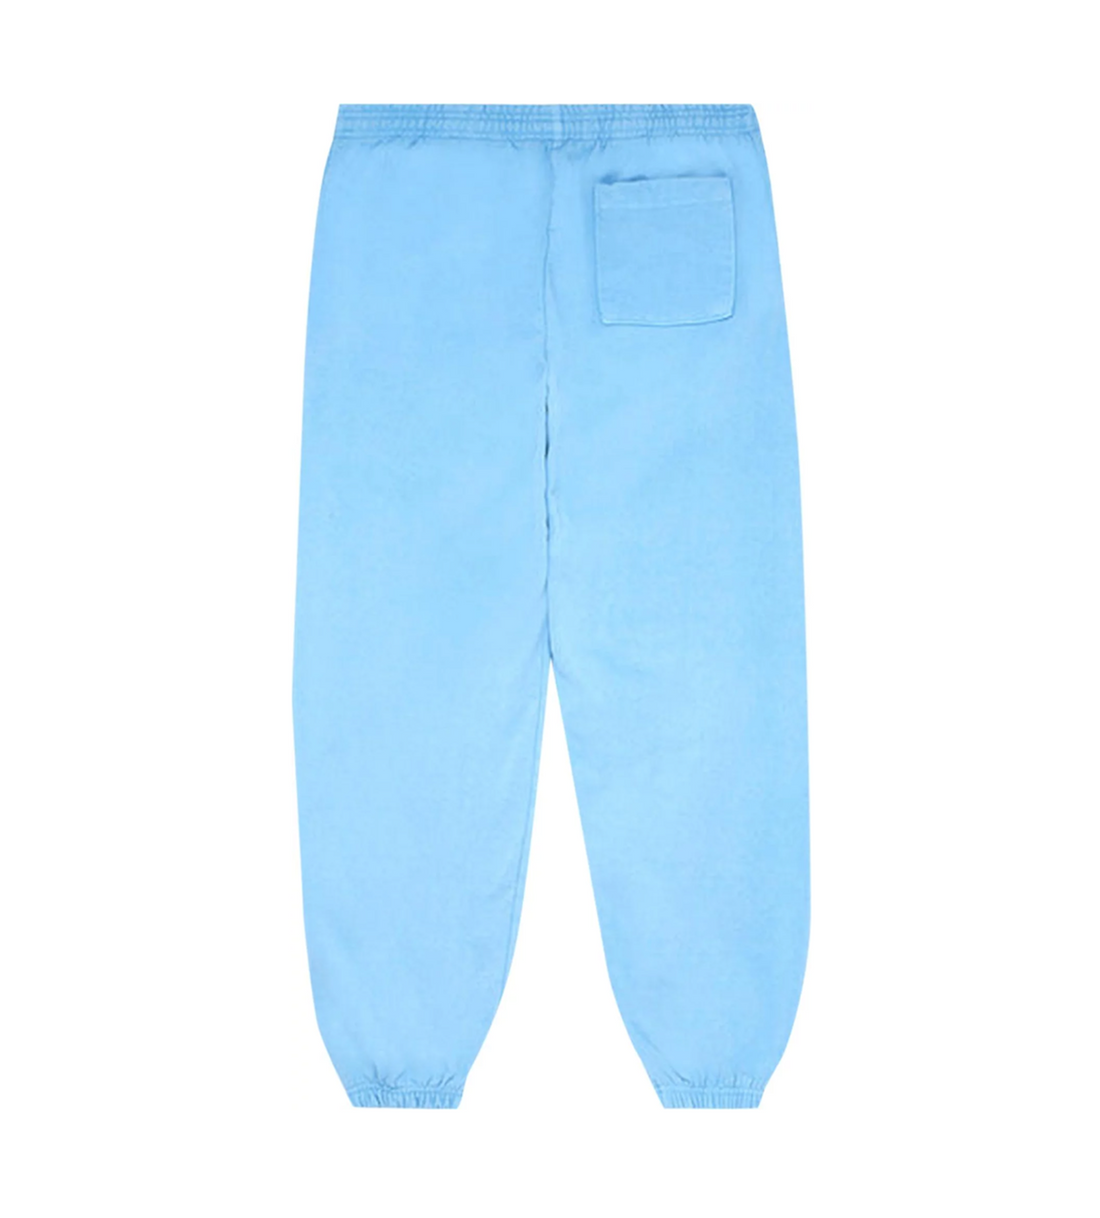 Product Image Of Sp5der Classic Sweatpants Light Blue Back View